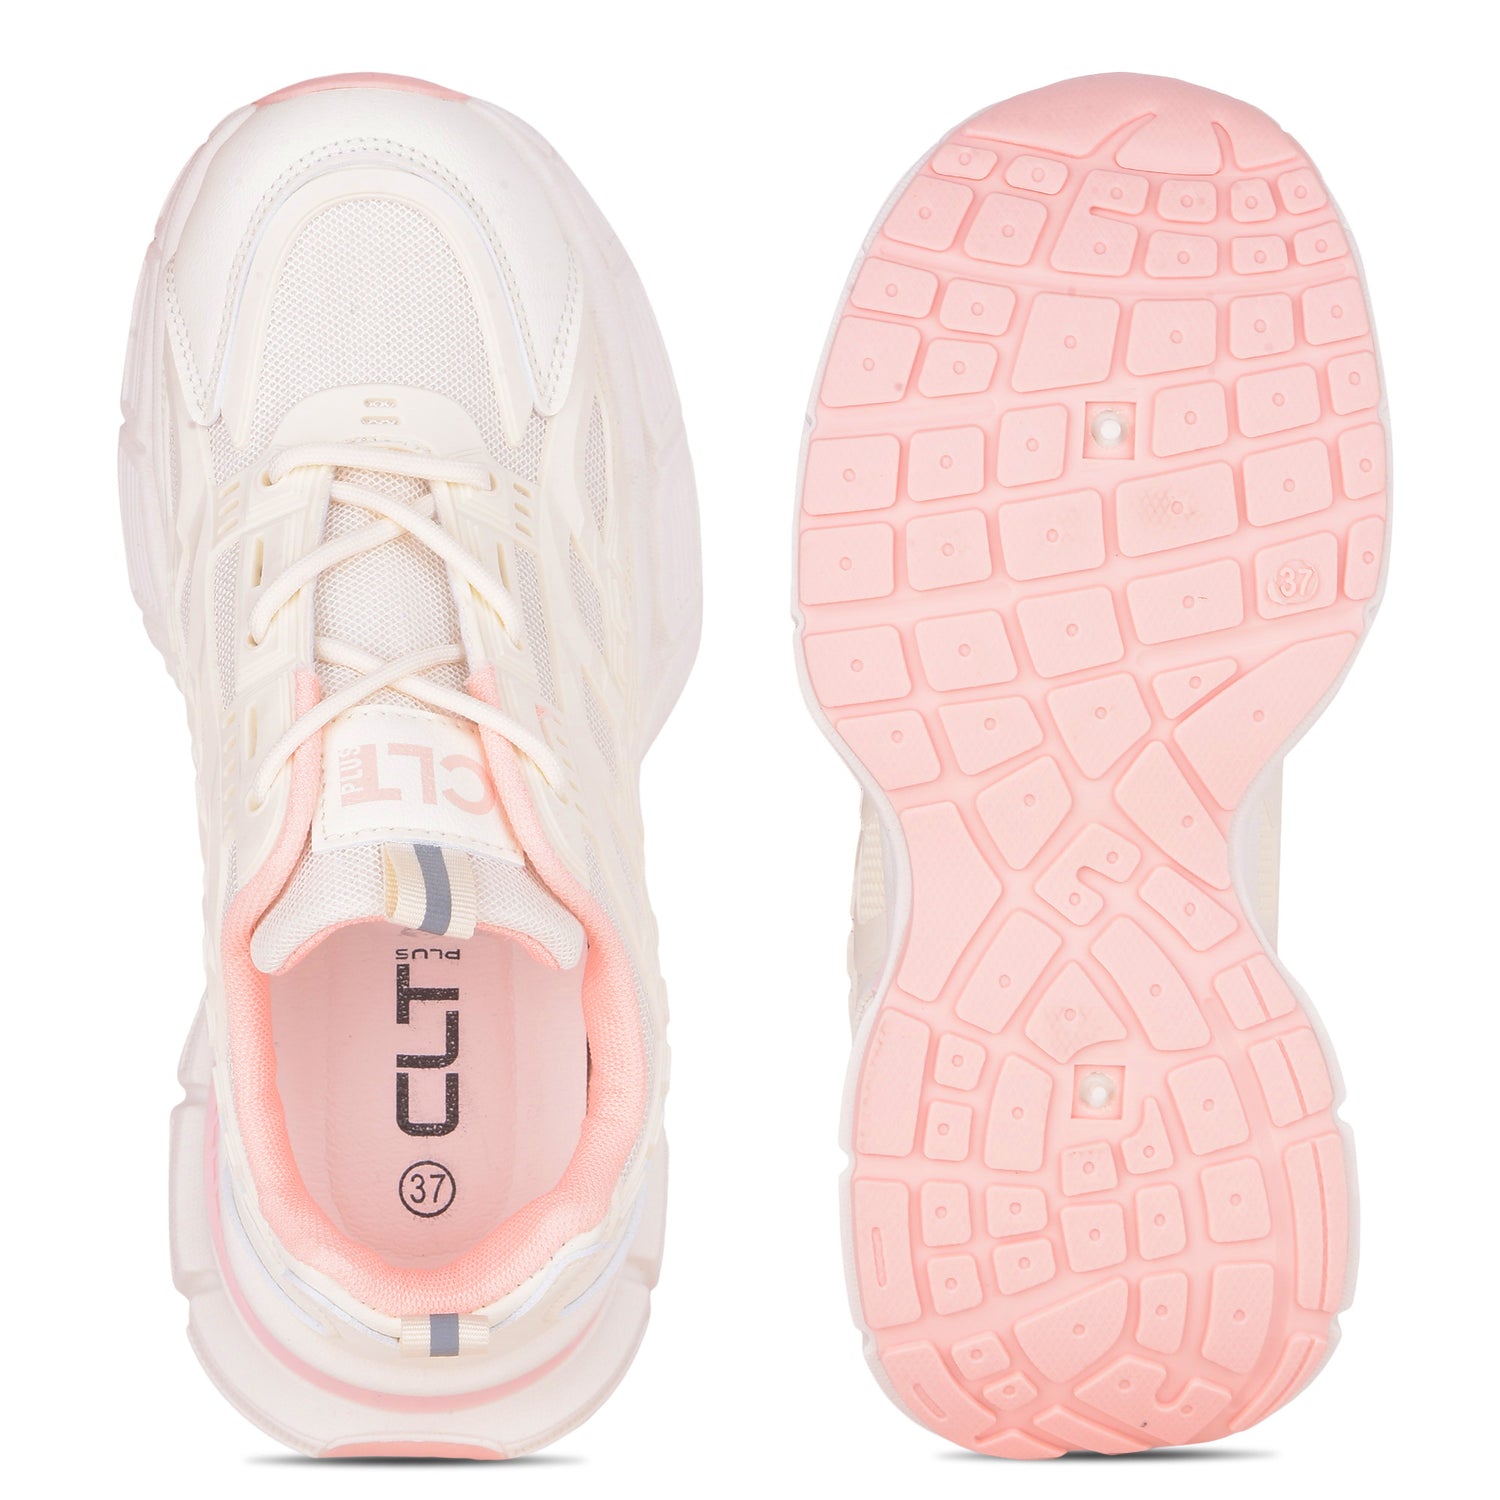 Calcetto LDS-034 Beige Pink Women Casual Shoe